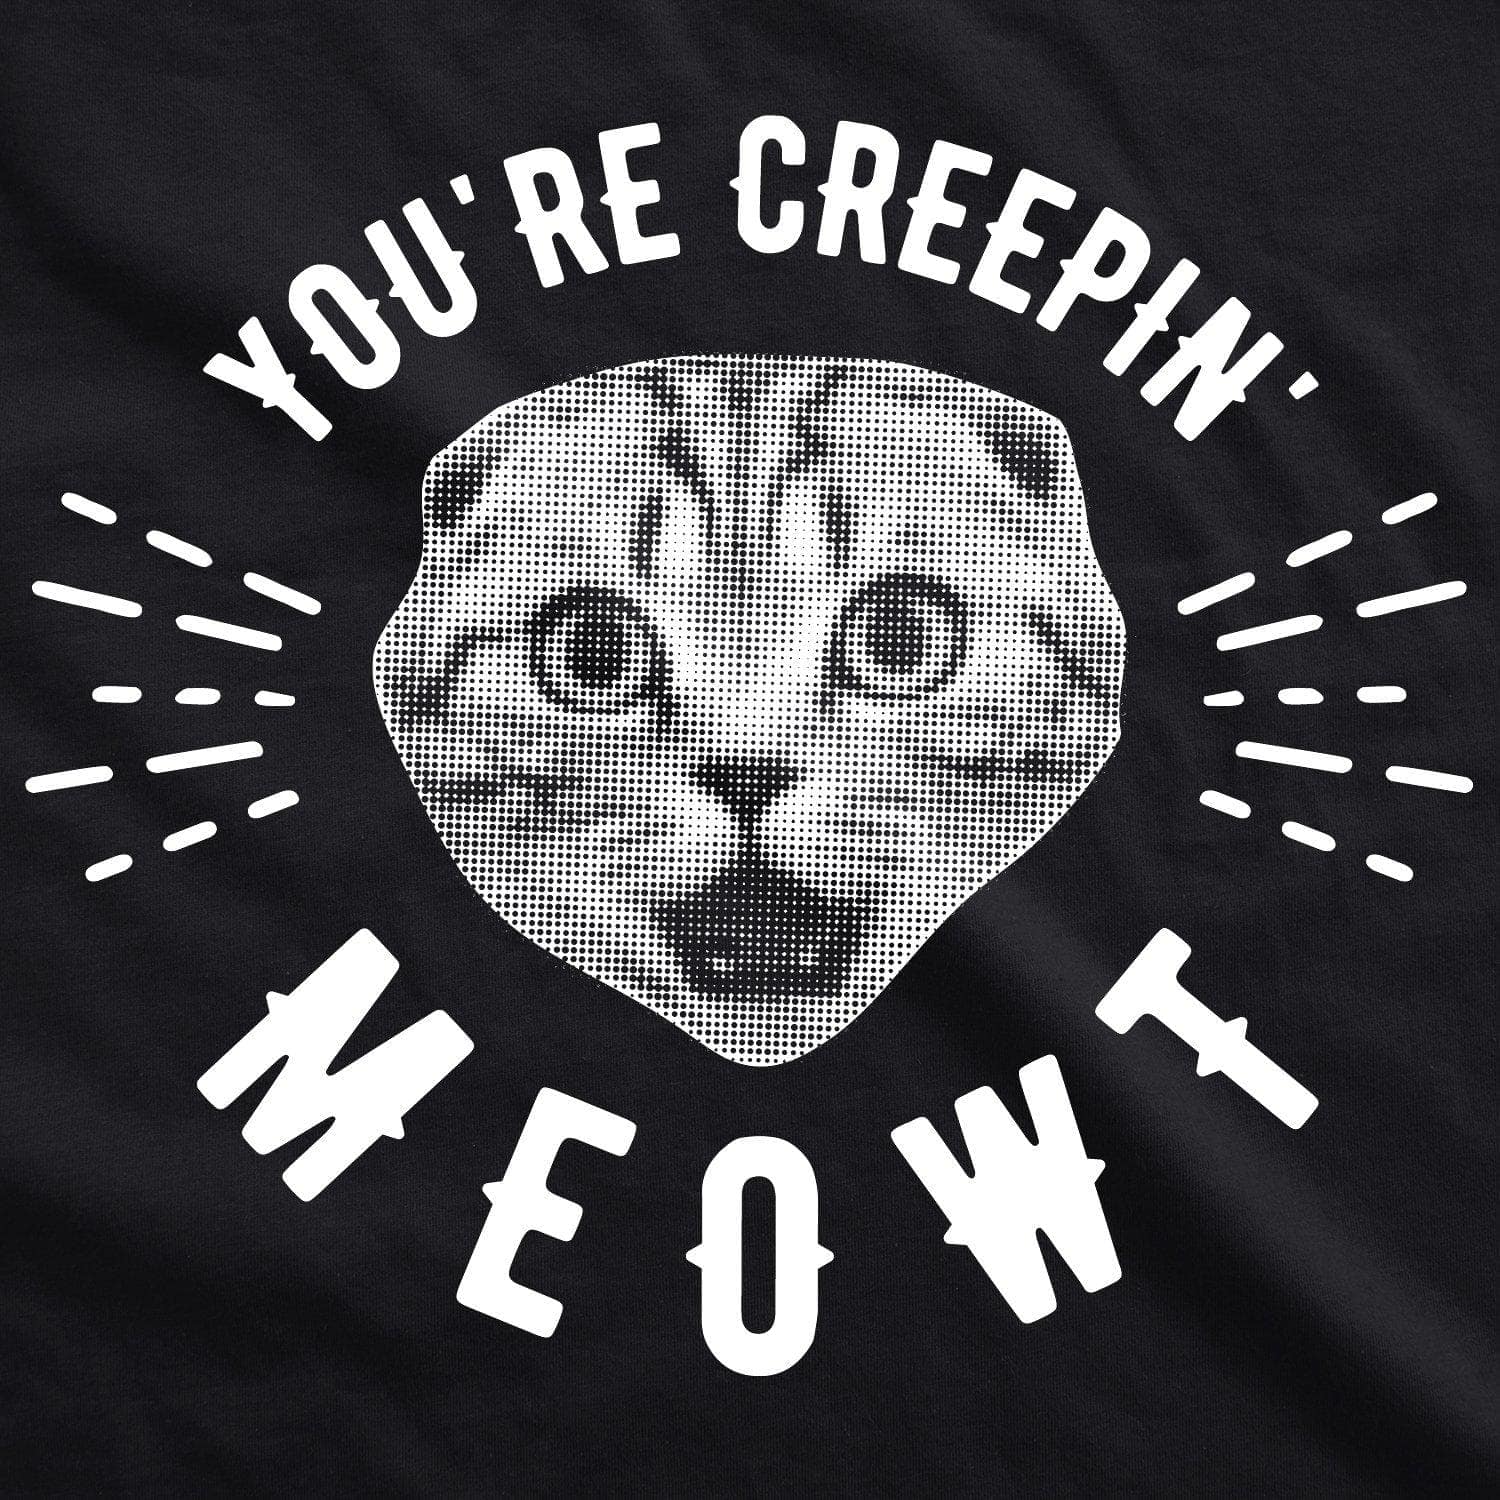 You're Creepin Meowt Men's Tshirt - Crazy Dog T-Shirts